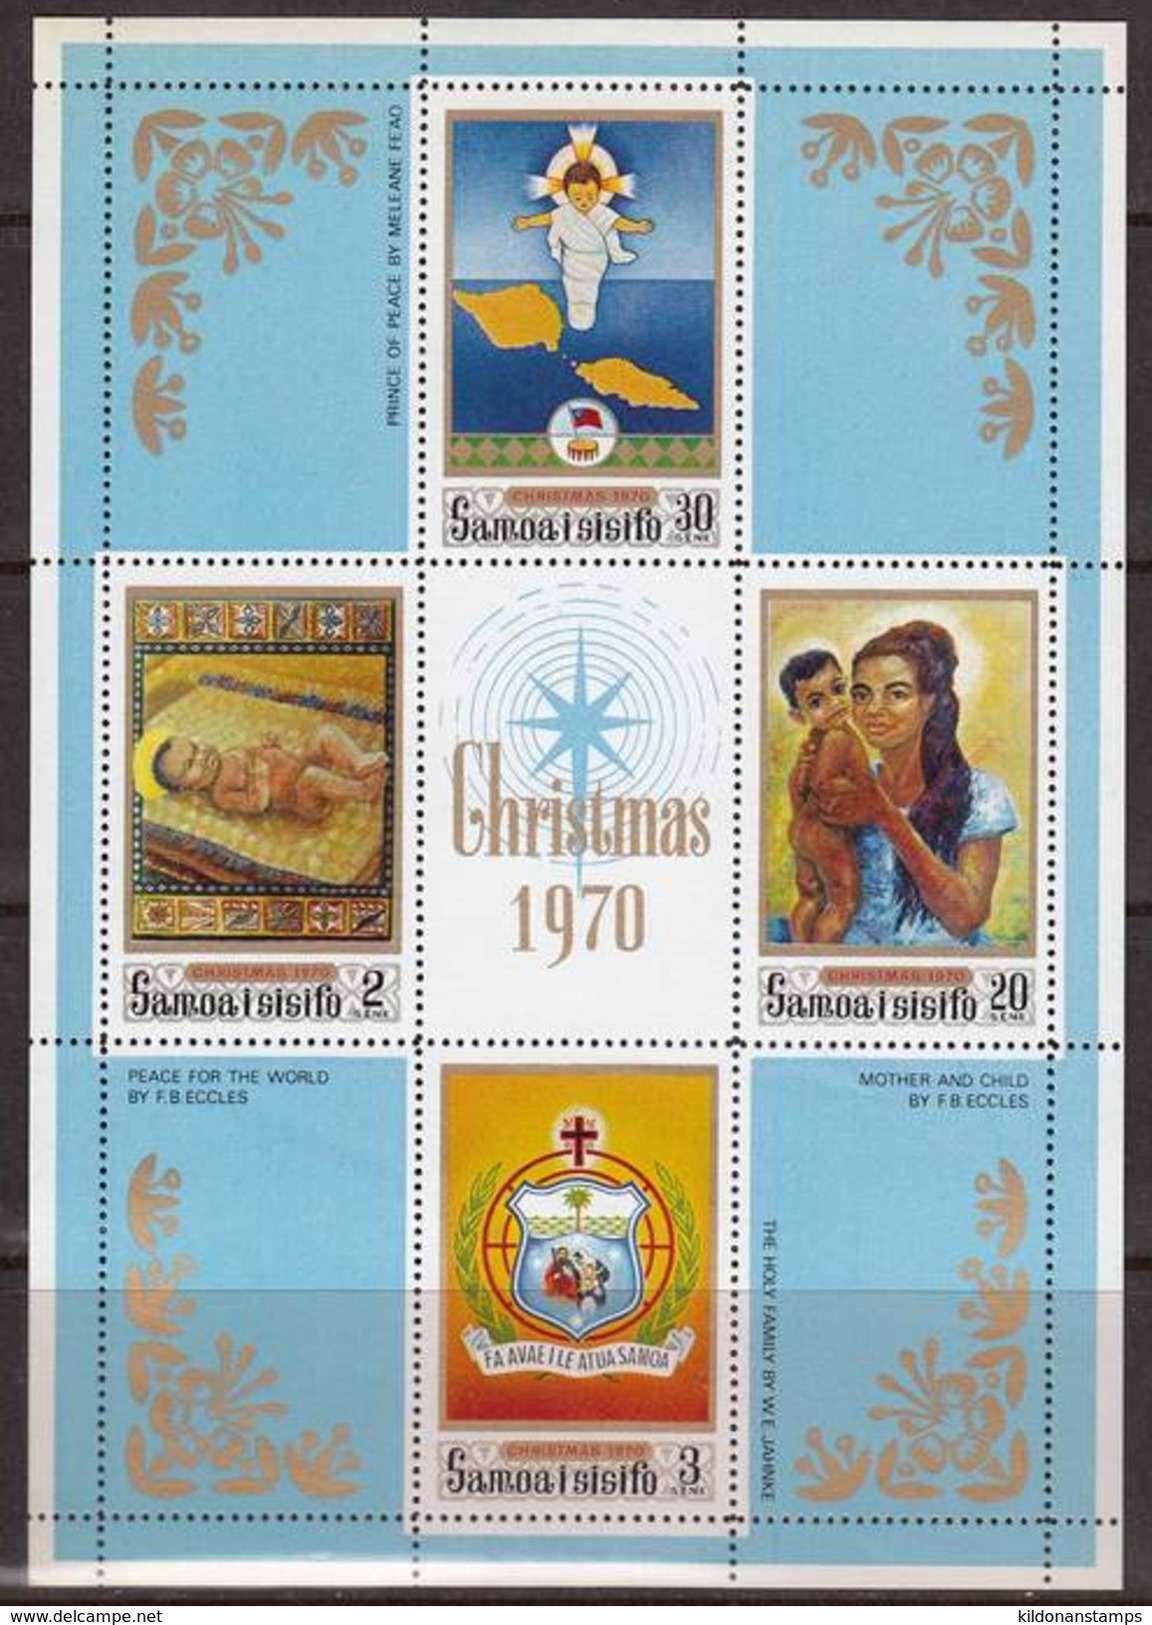 Samoa 1970 Christmas Minisheet, Mint No Hinge, Sc# 336a, SG MS357 - Samoa (Staat)